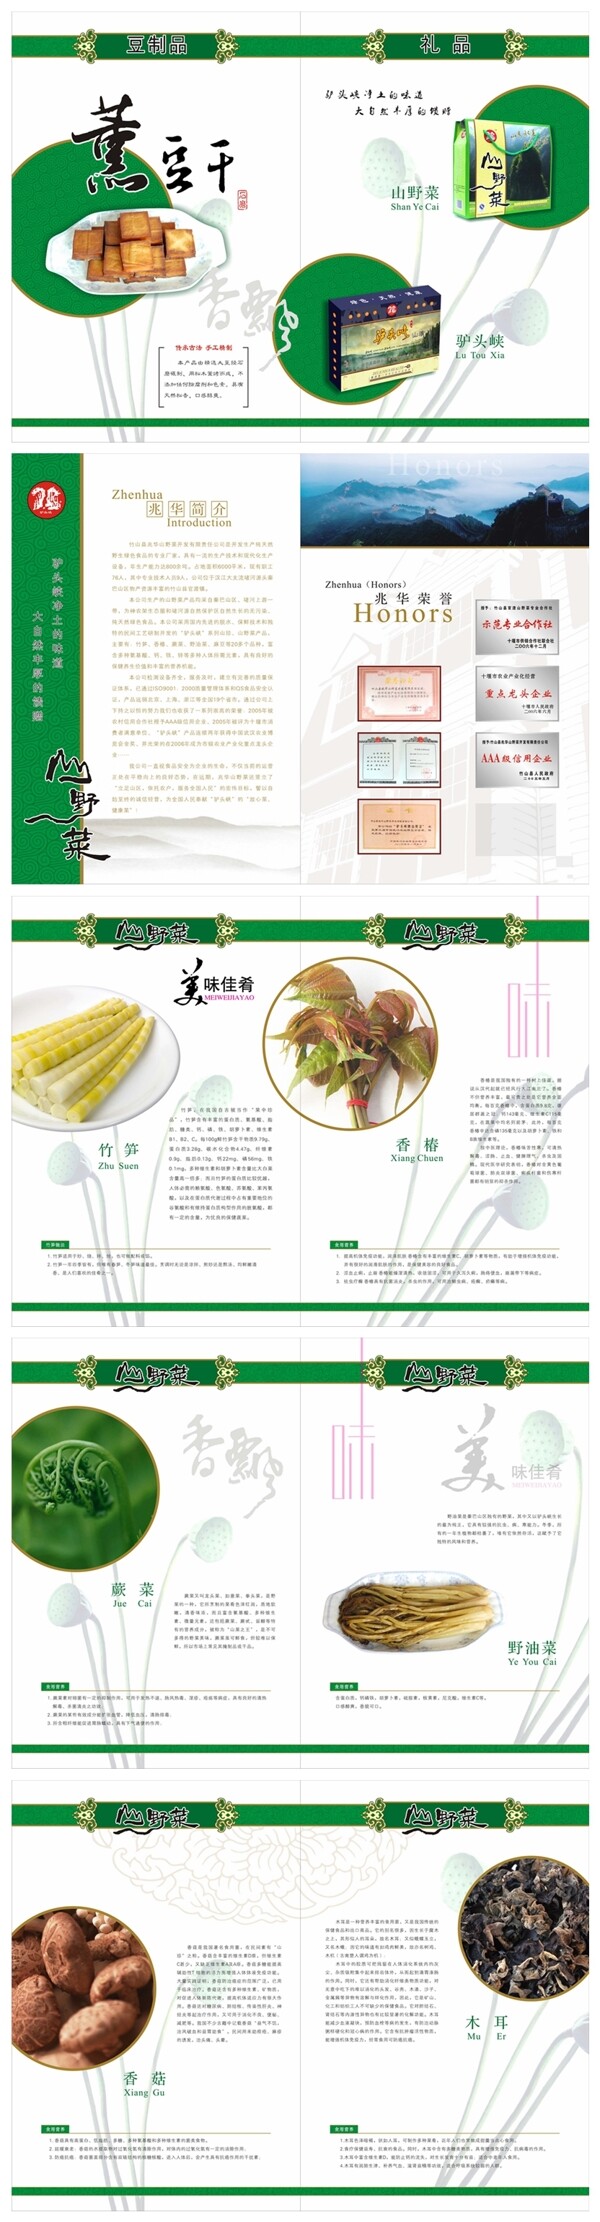 CDR豆干产品宣传画册素材下载